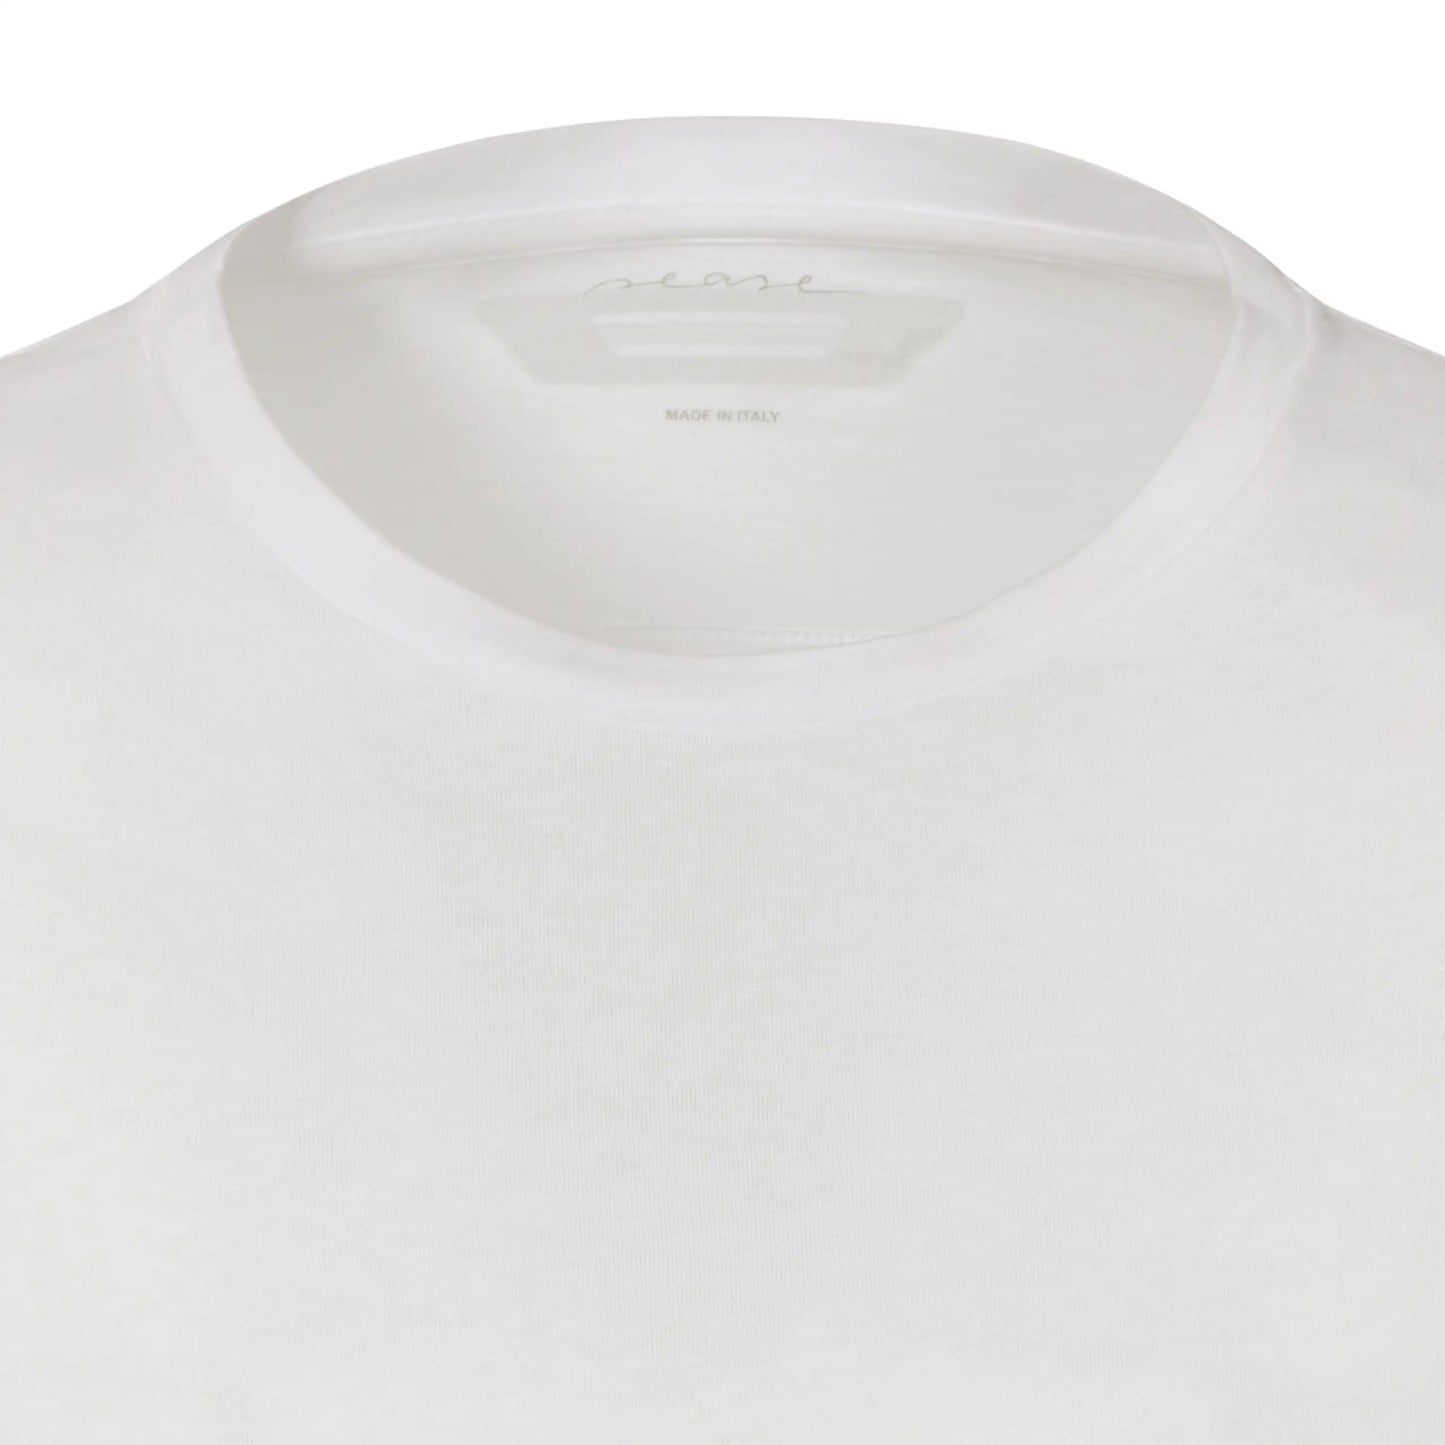 VMG 2.0 Long Sleeve T-Shirt in Warm White